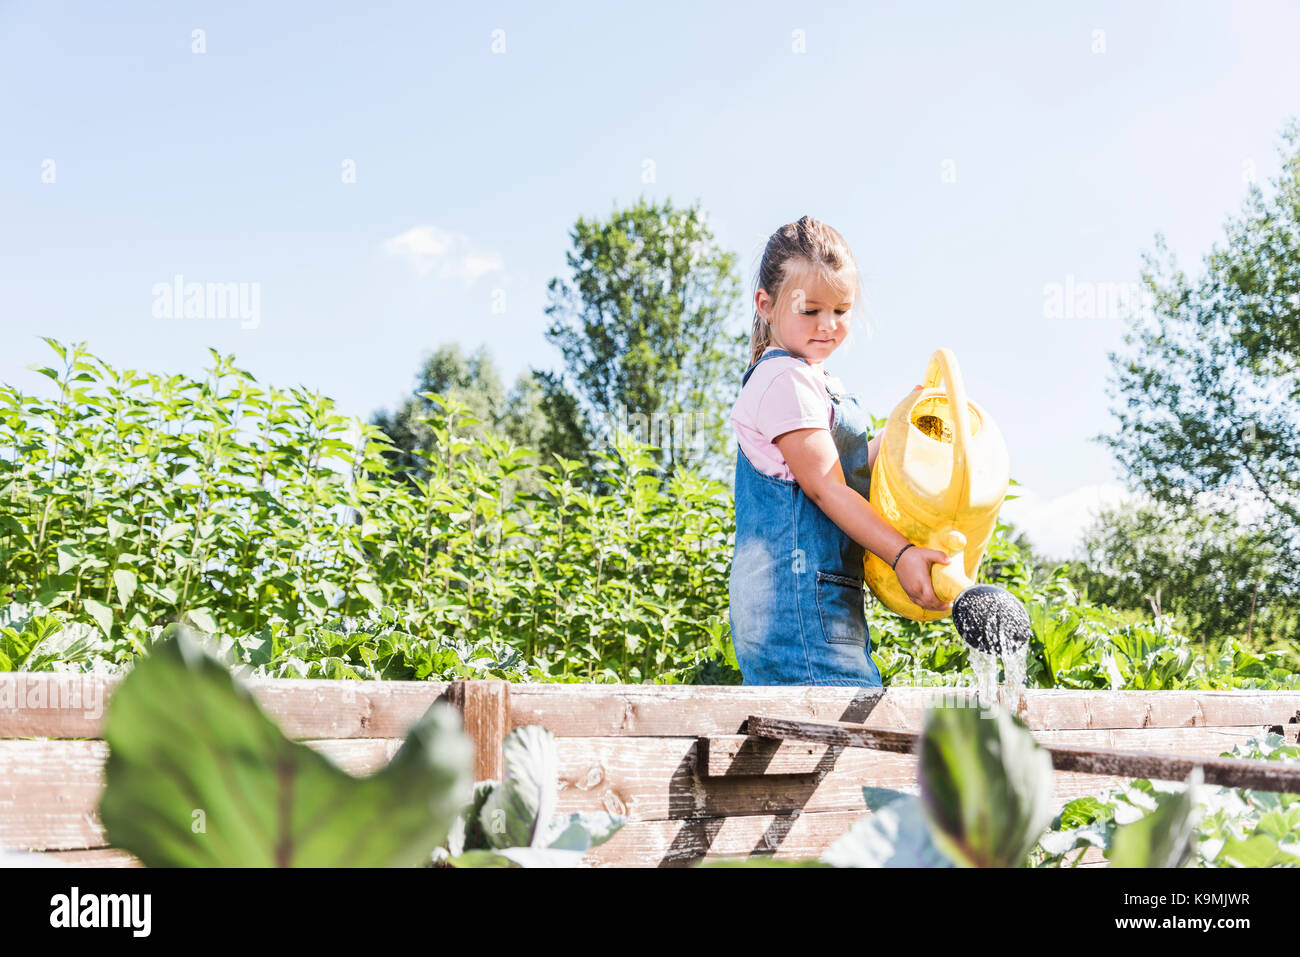 Girl in the garden watering plants Stock Photo